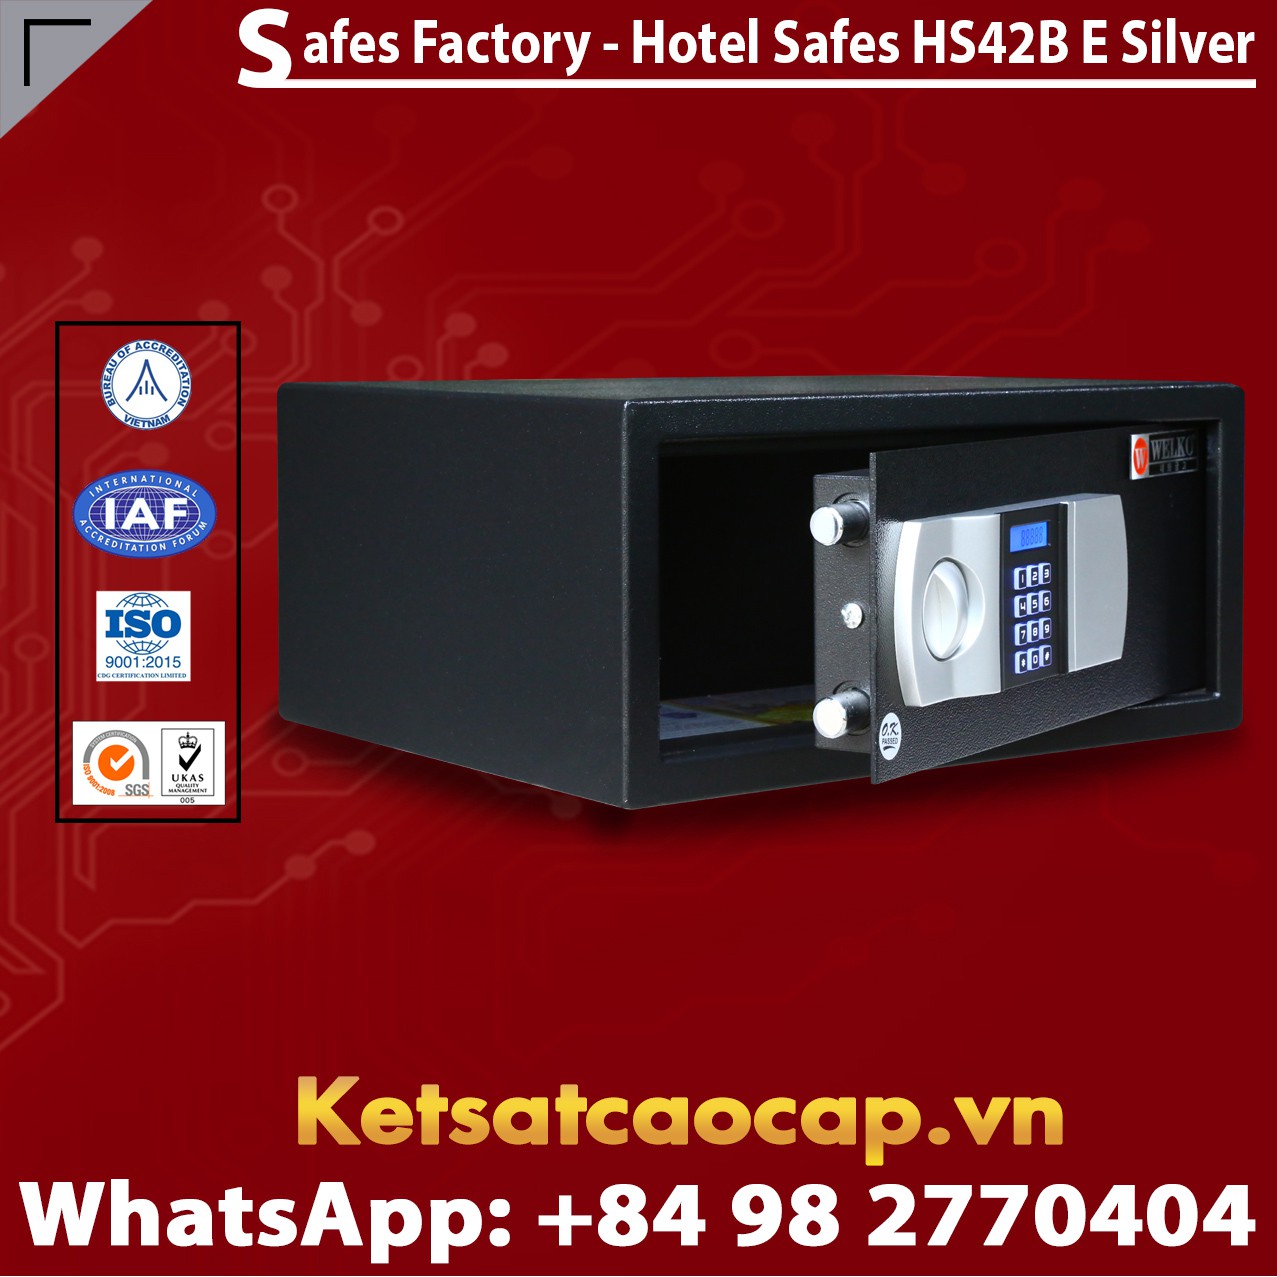 Portable Hotel Safes WELKO HS42 Black - E Silver